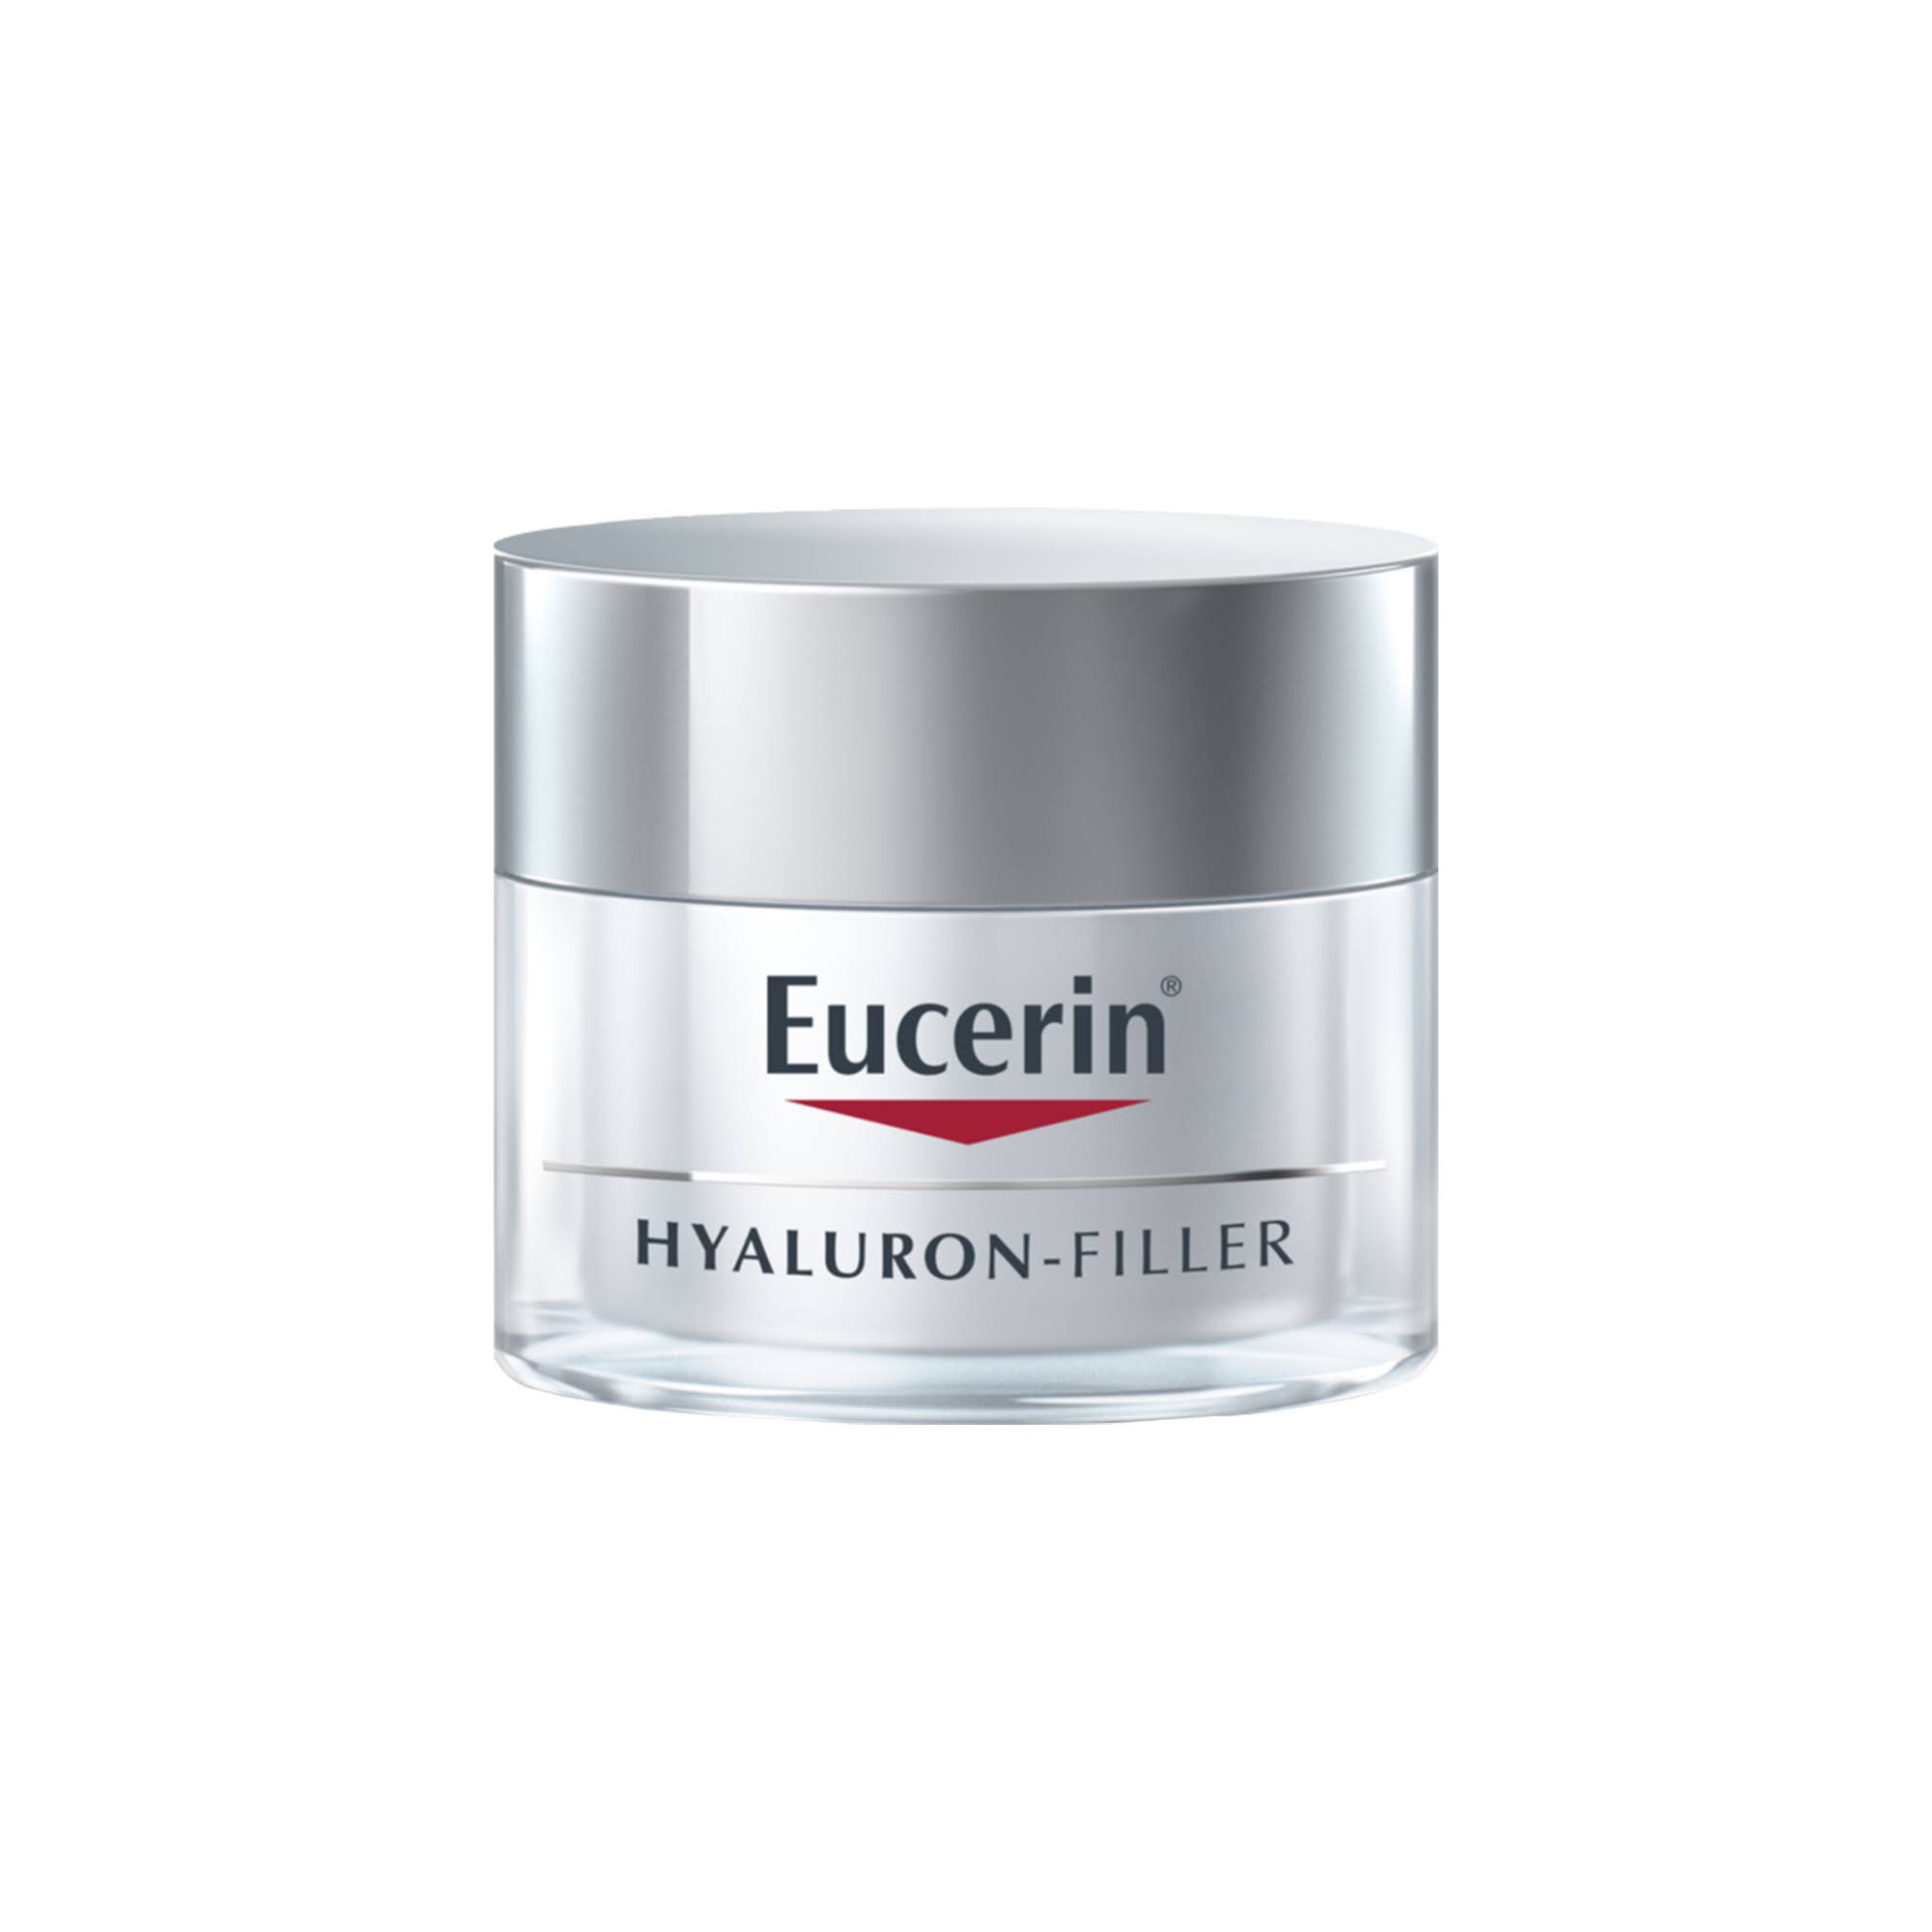 Eucerin Anti-Age Hyaluron-Filler Day Cream - 50ml